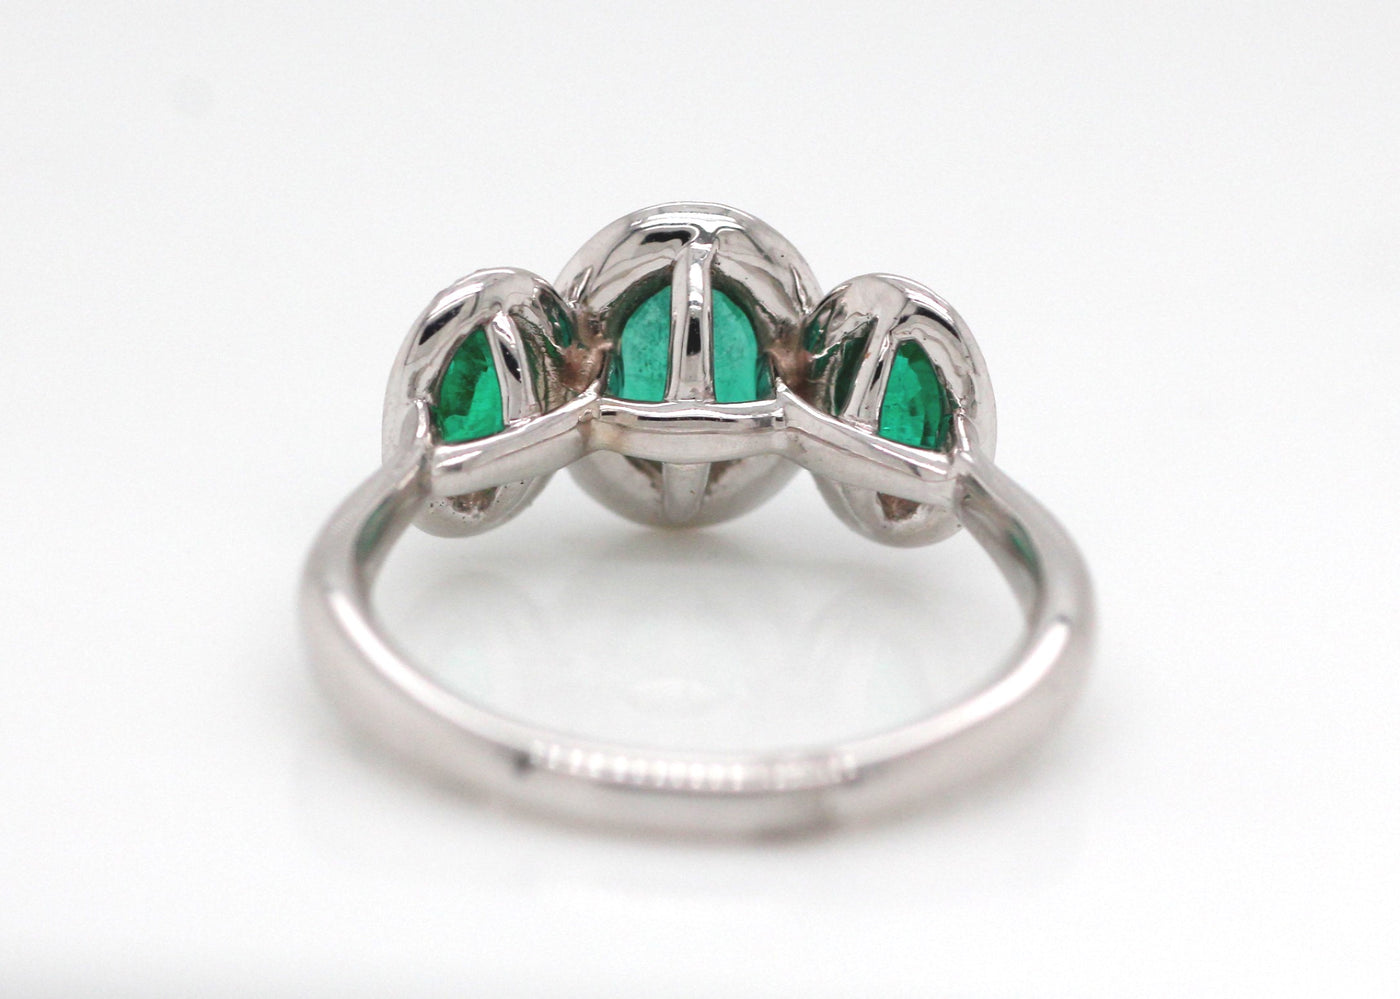 14KW Emerald And Diamond Ring